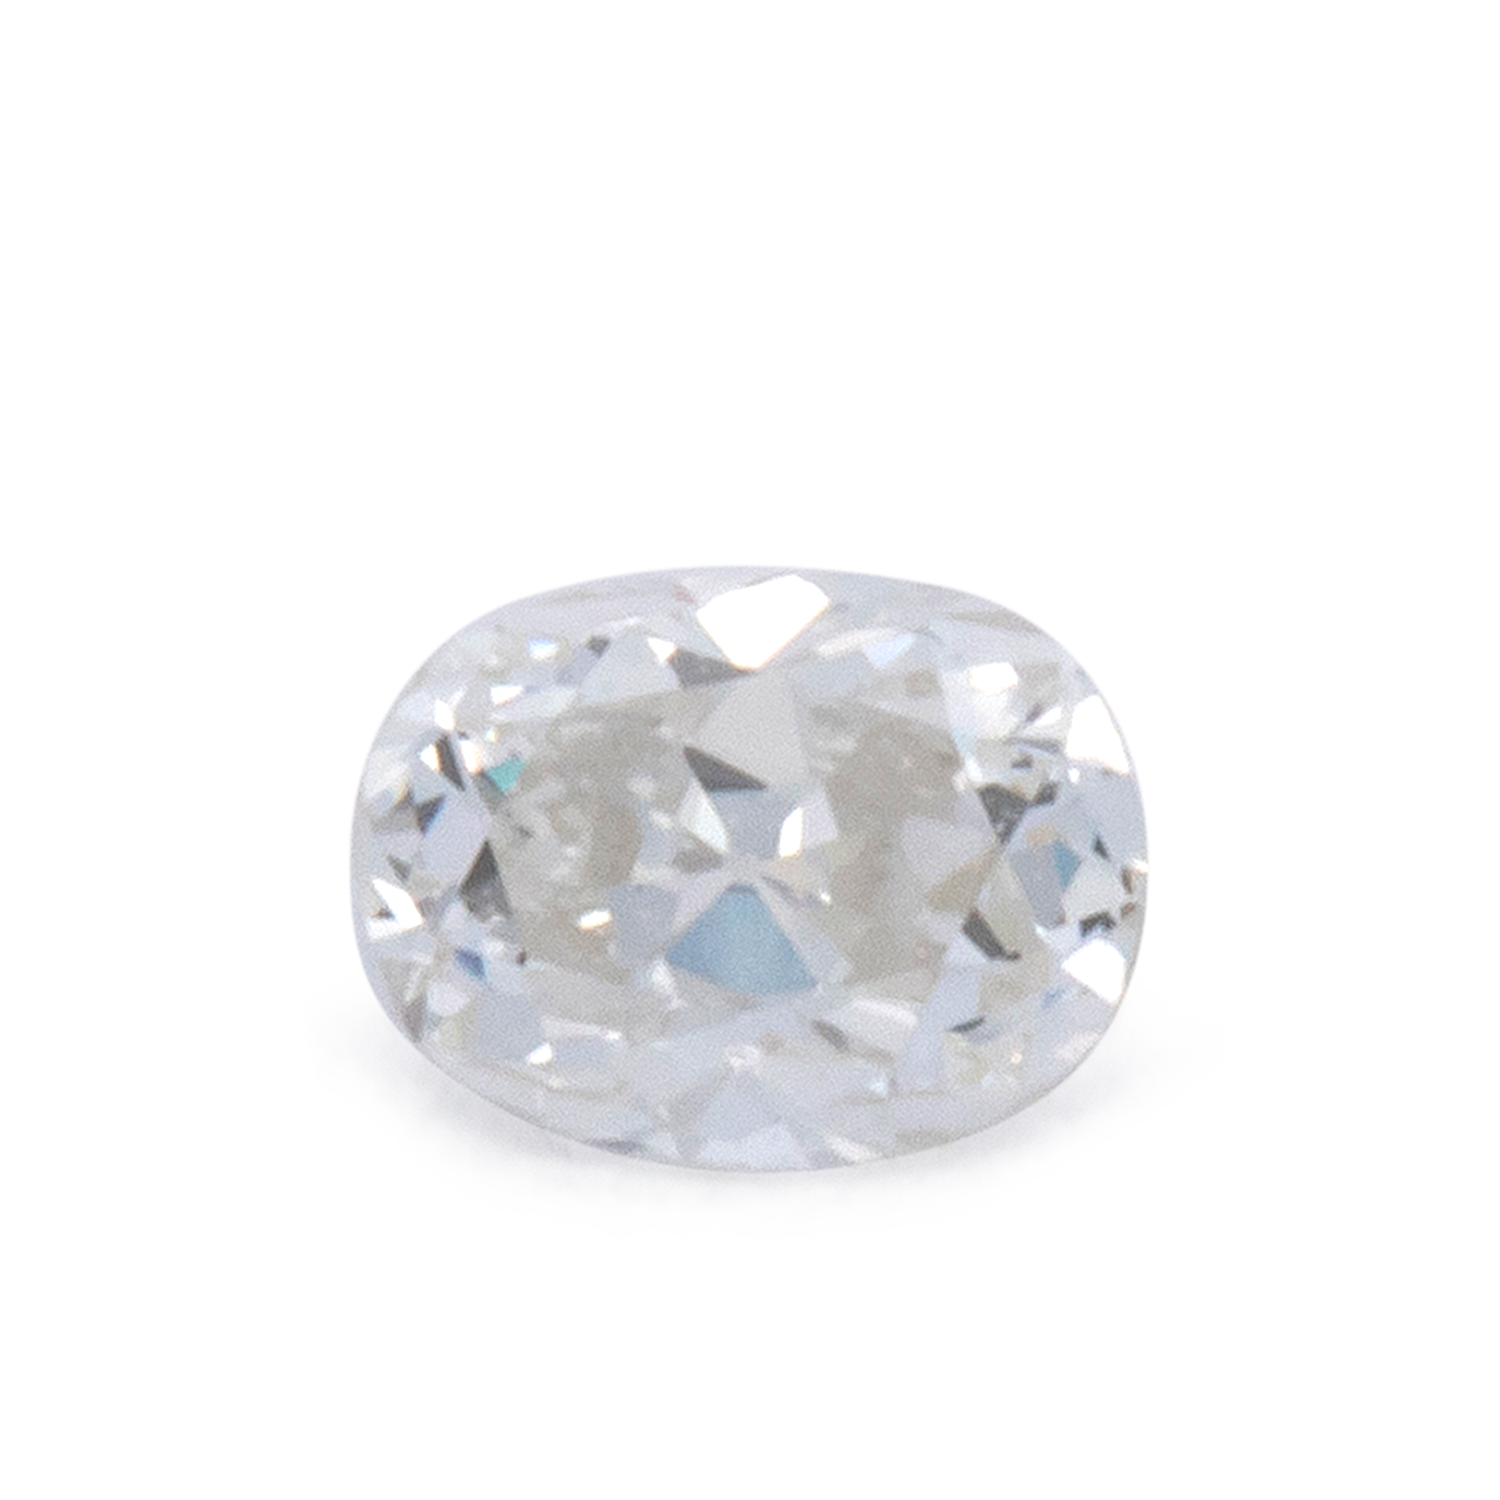 Diamant - fein weiß, oval, 3.2x2.4 mm, 0.09 cts, Nr. DT1018